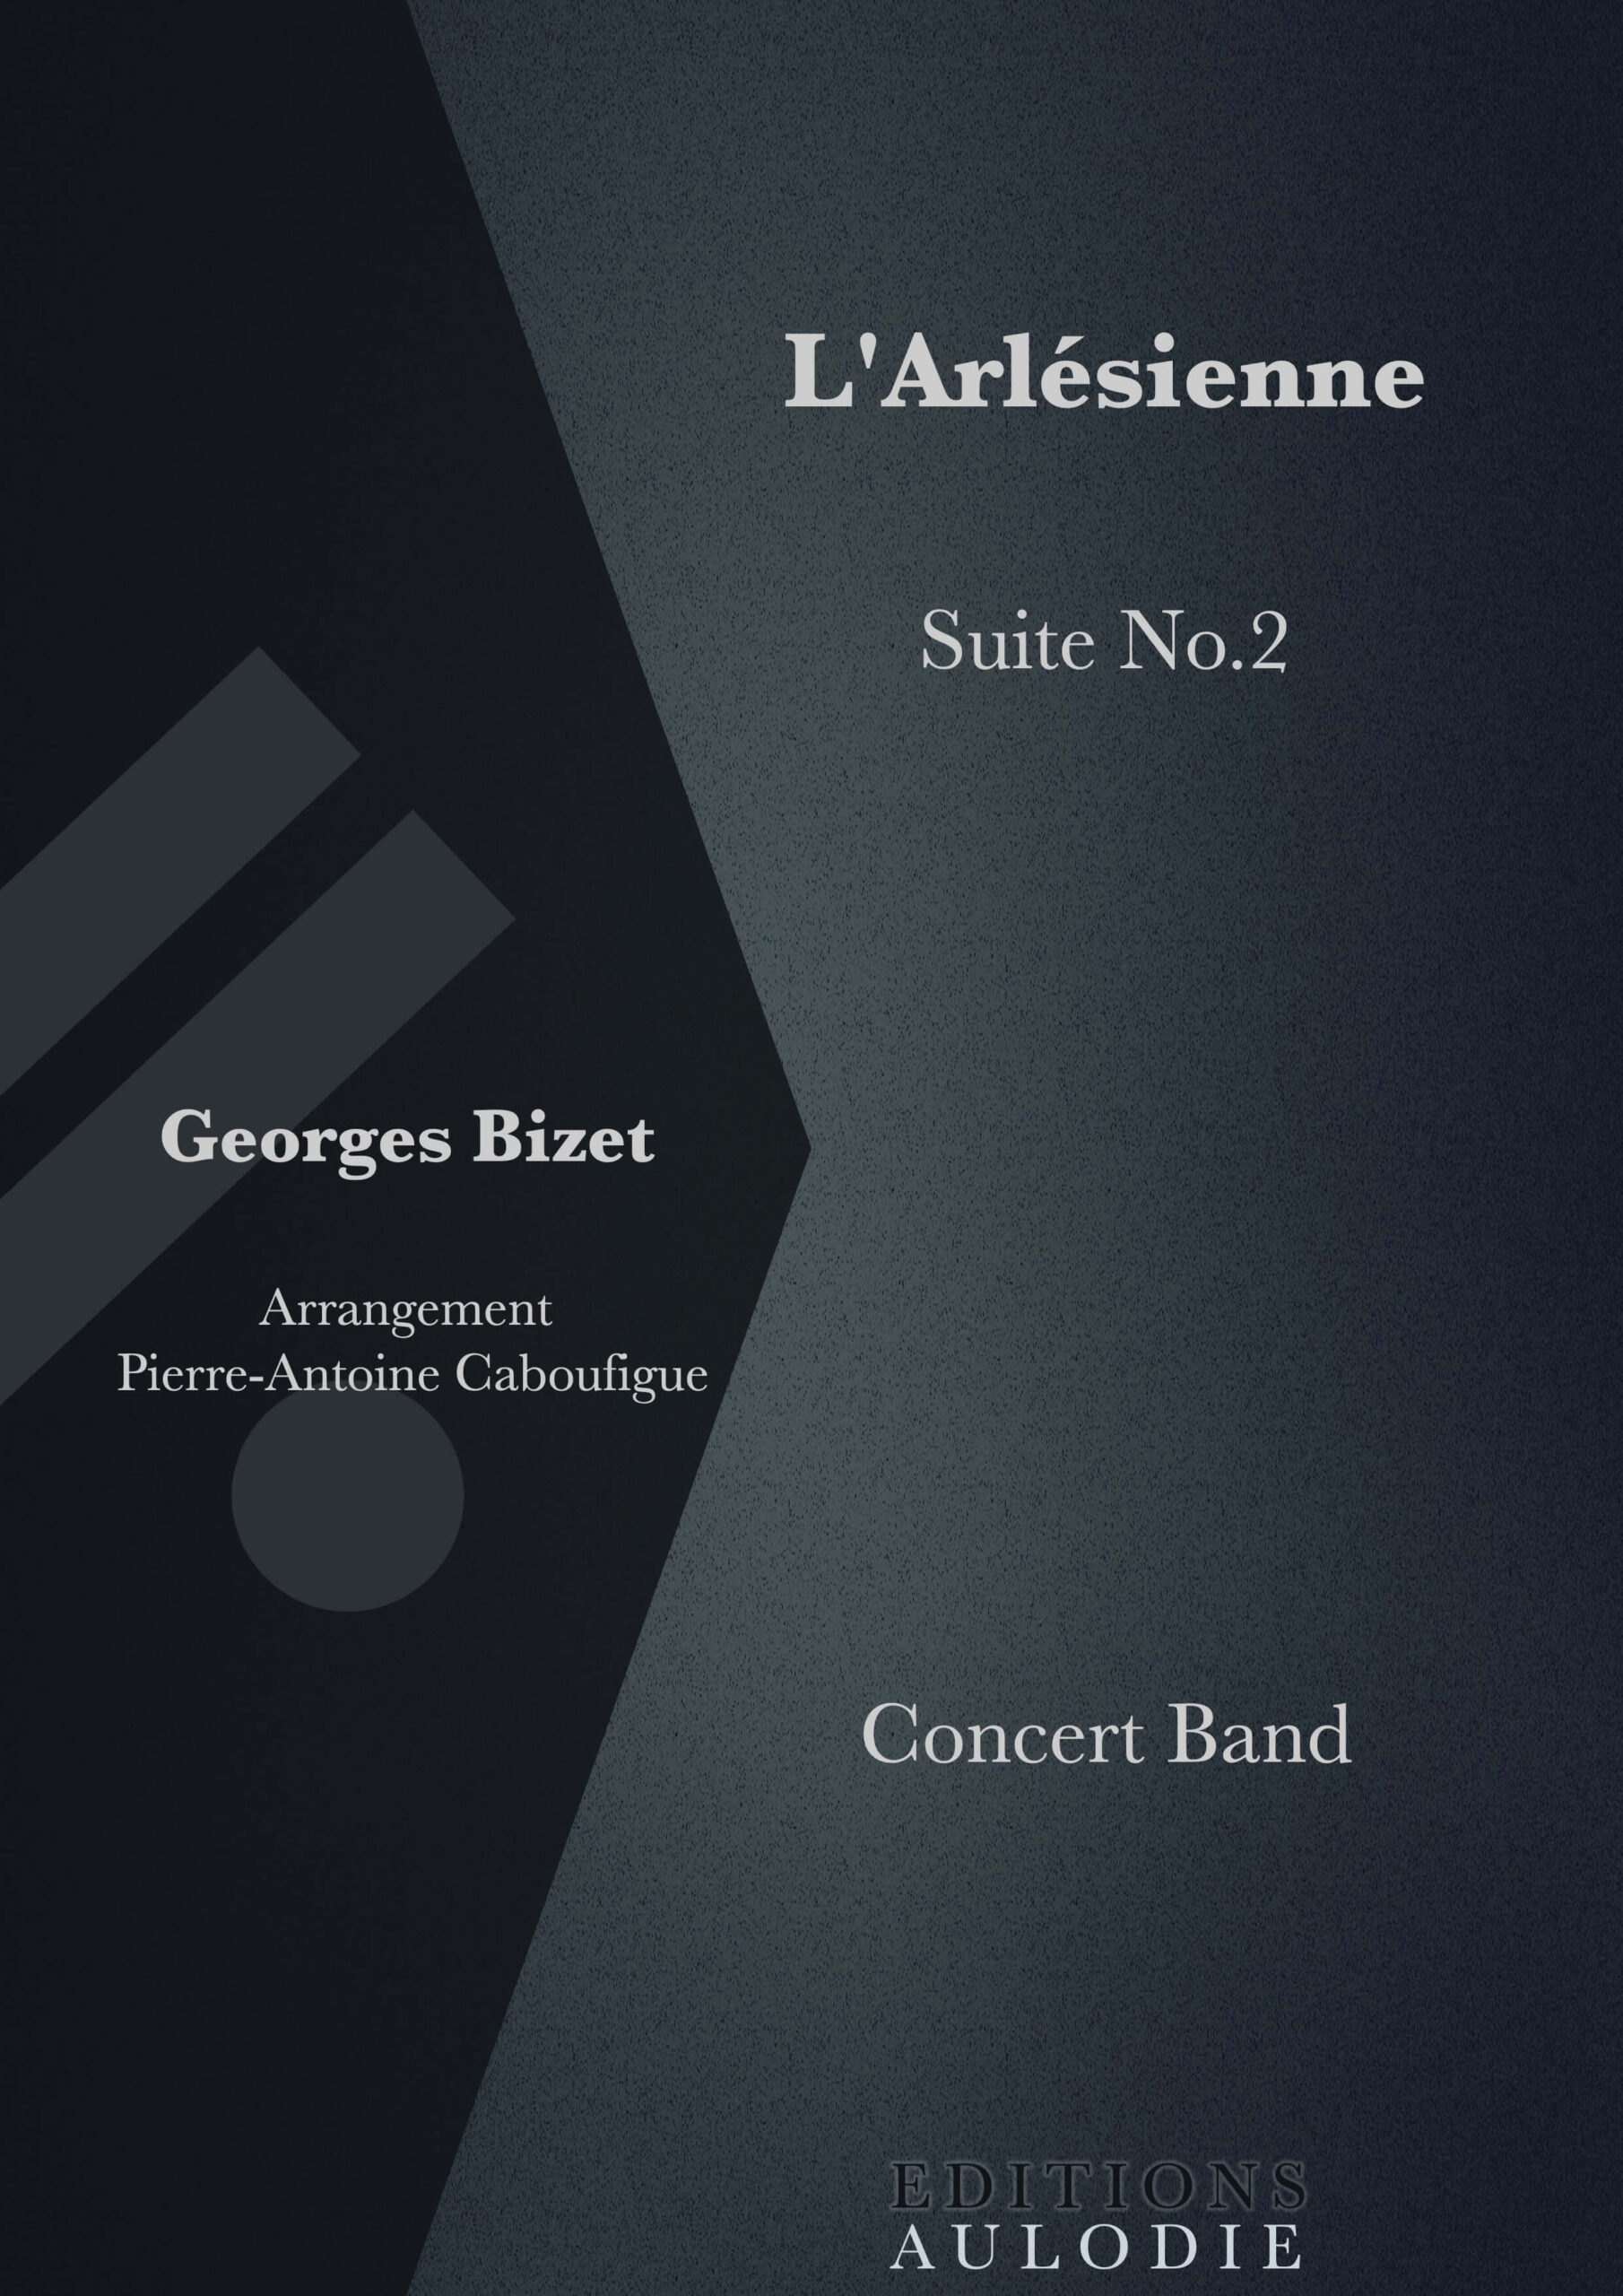 EA01030-LArlesienne_Suite_No2-Georges_Bizet-Concert_Band